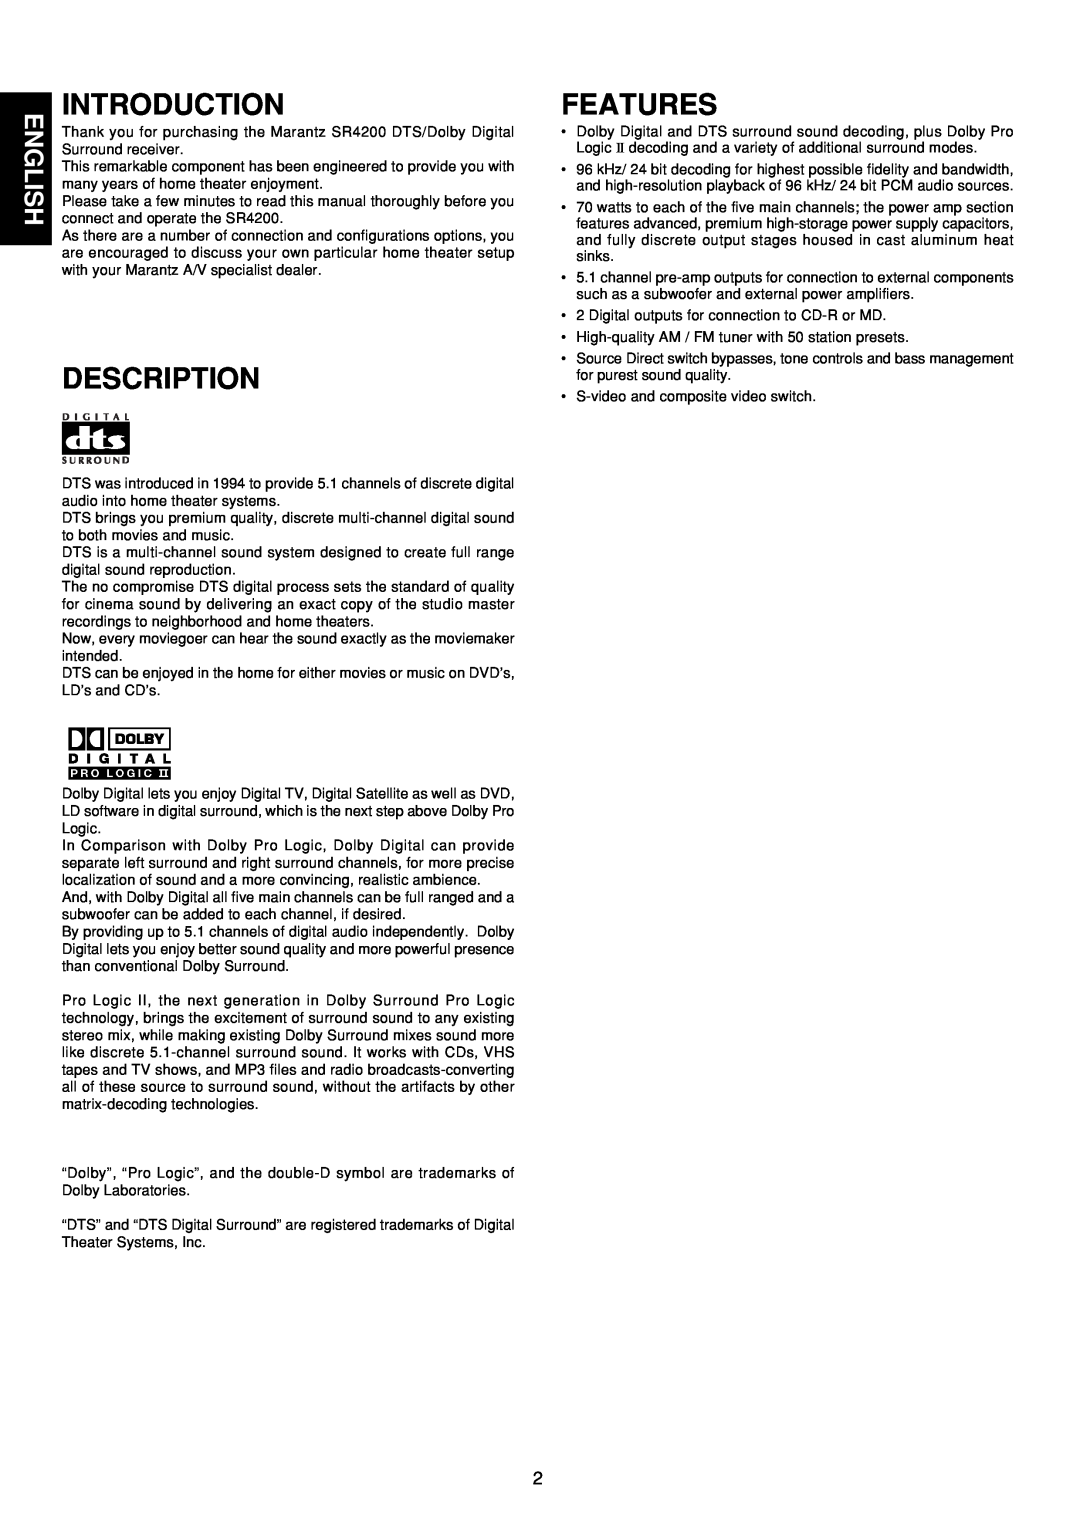 Marantz SR4200 manual Introduction, Description, Features 